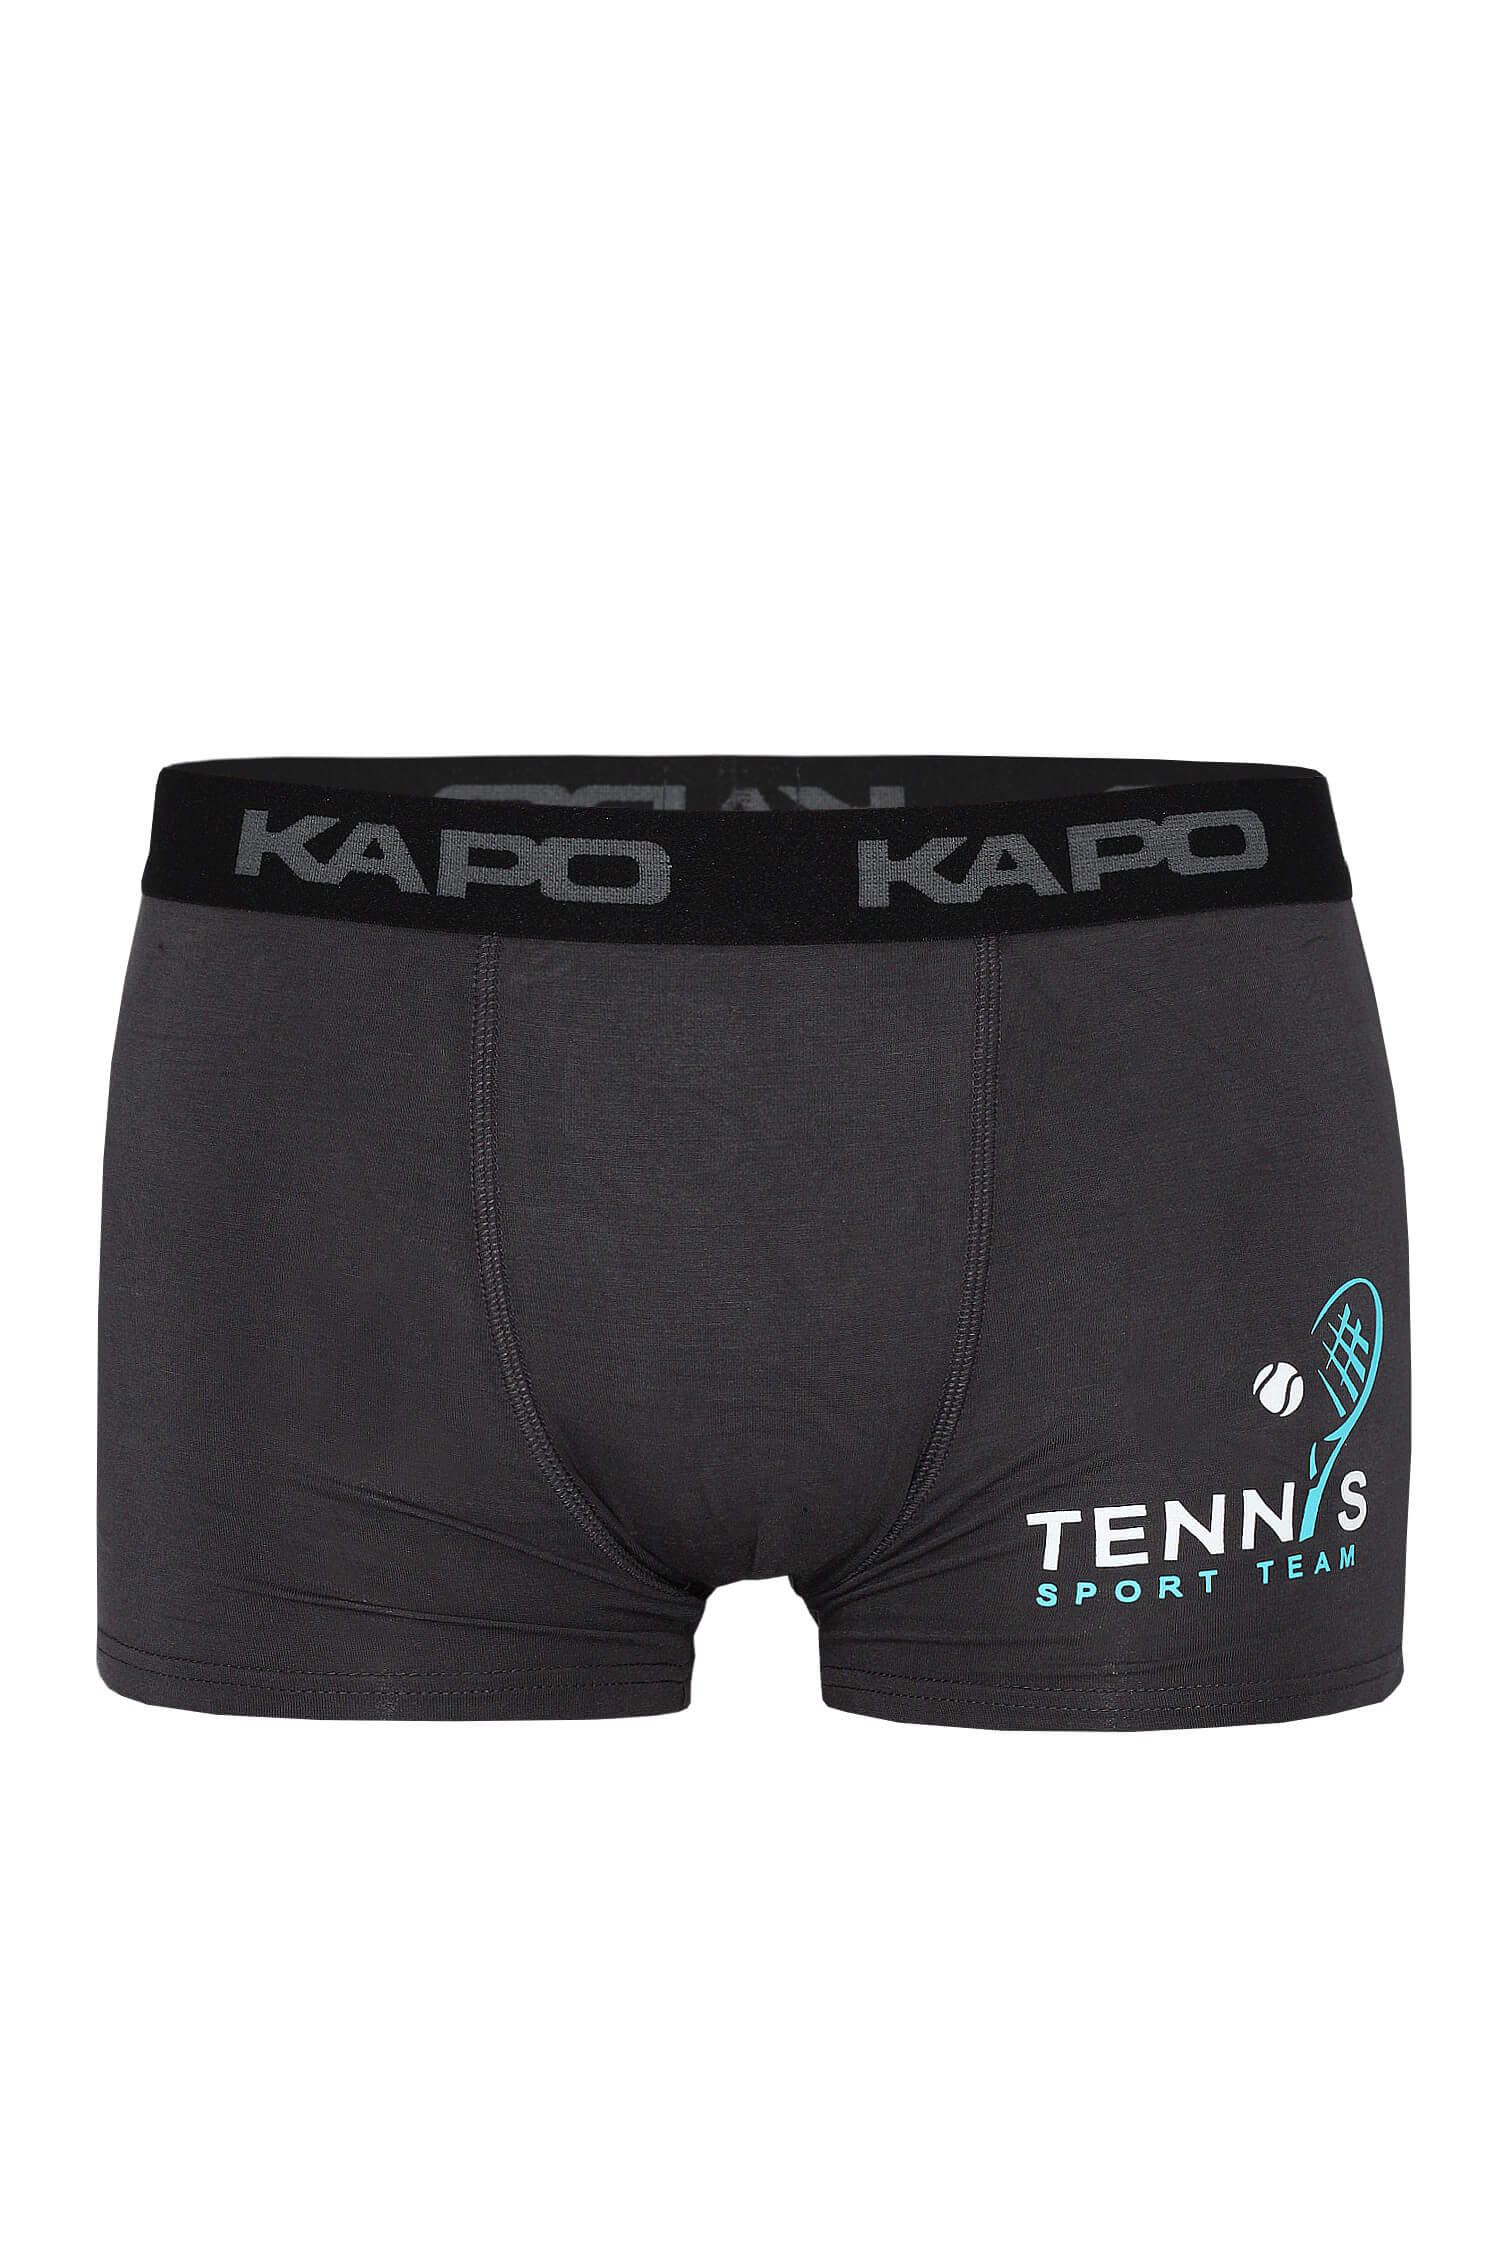 Rafael Kapo tenis boxerky XXL tmavě šedá